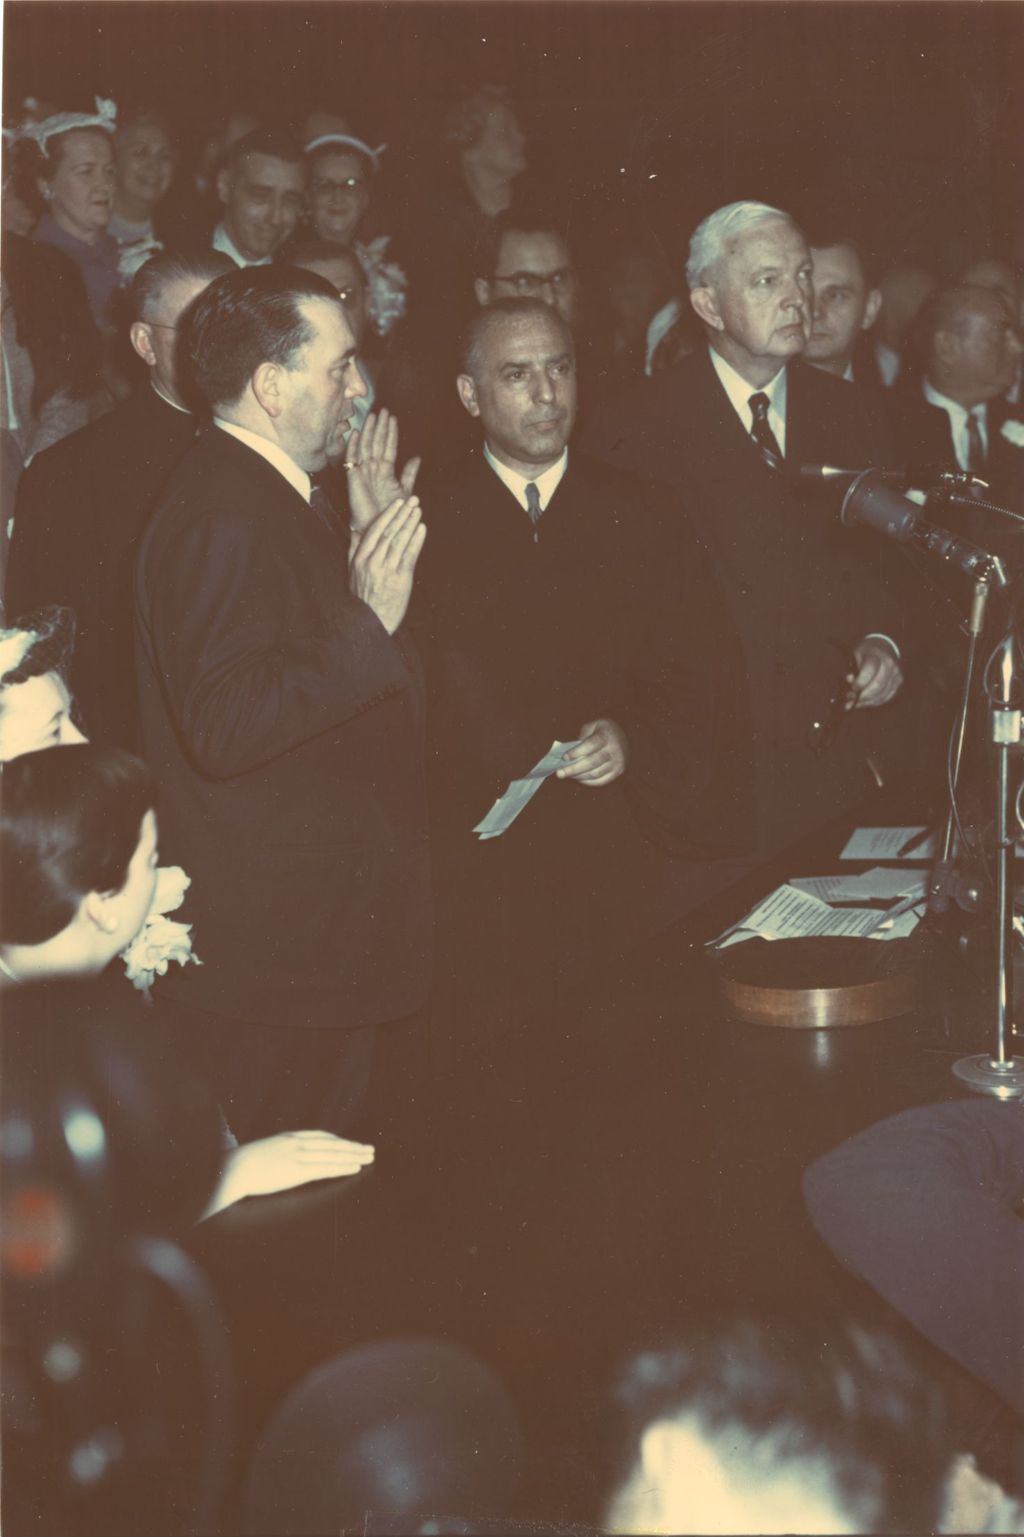 Miniature of Judge Marovitz swearing in Richard J. Daley as mayor